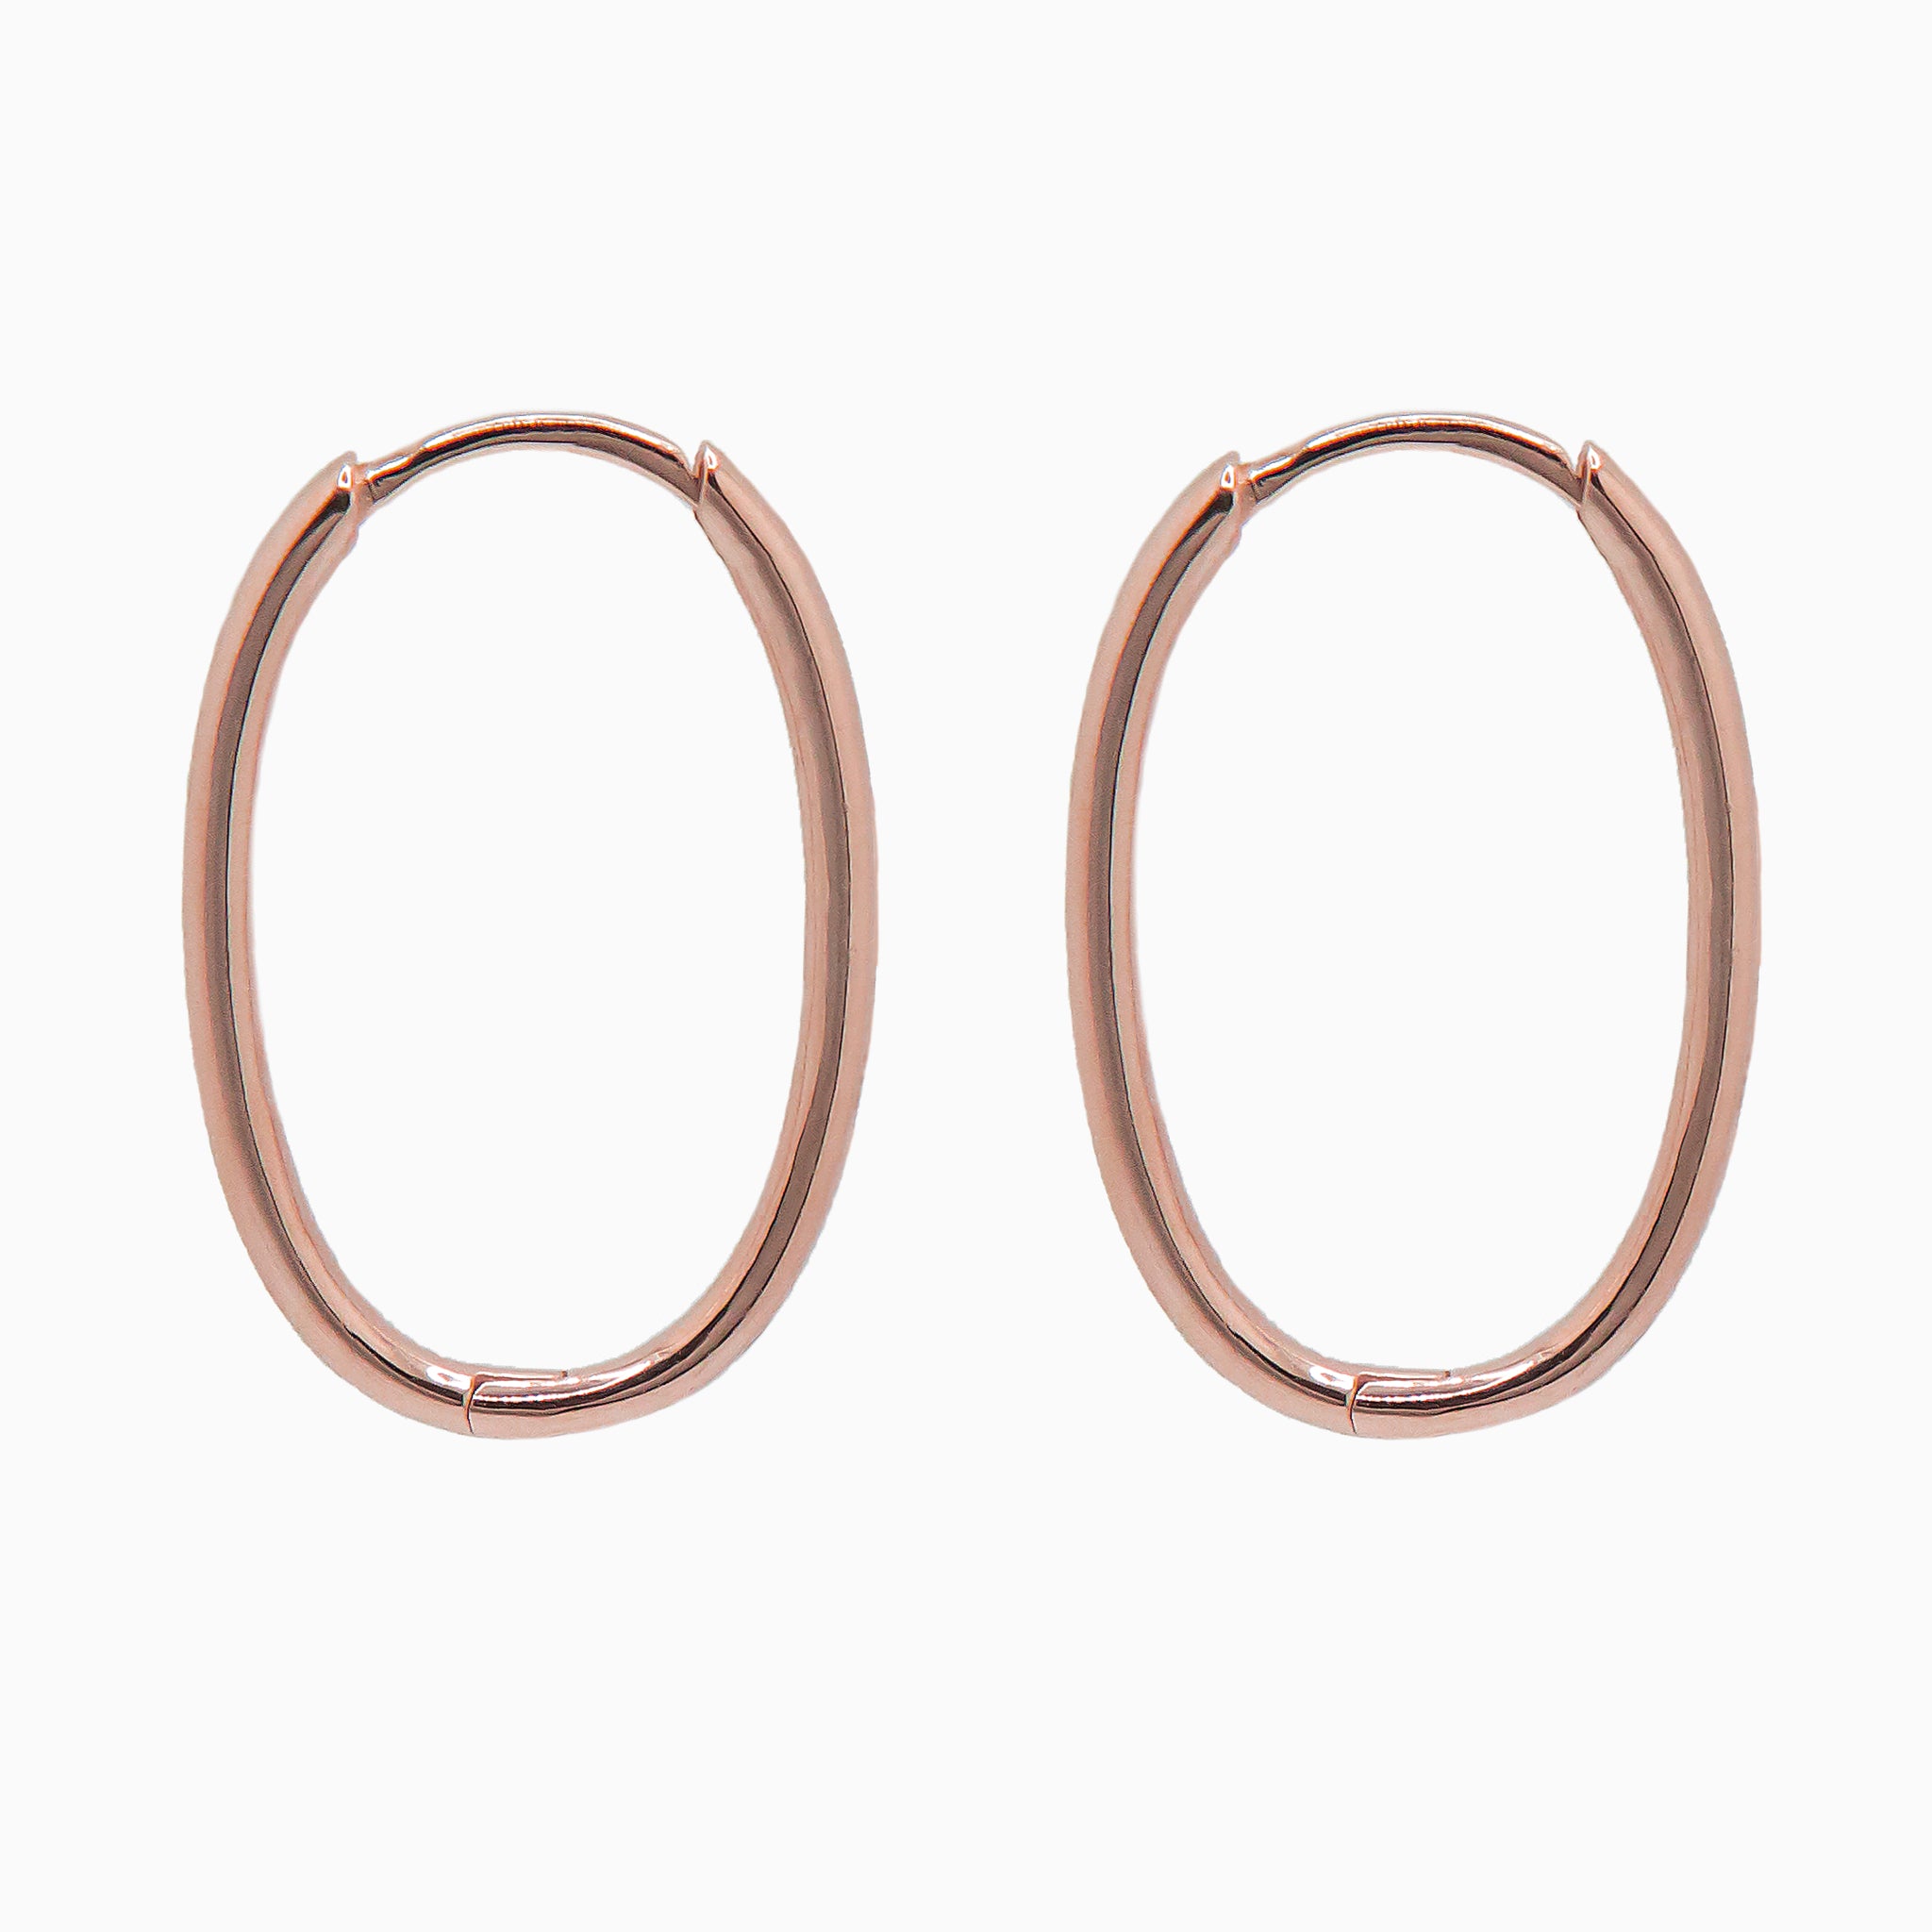 14k Rose Gold 23mm x 15mm Hinged Everyday Oval Hoop Earrings, Side View